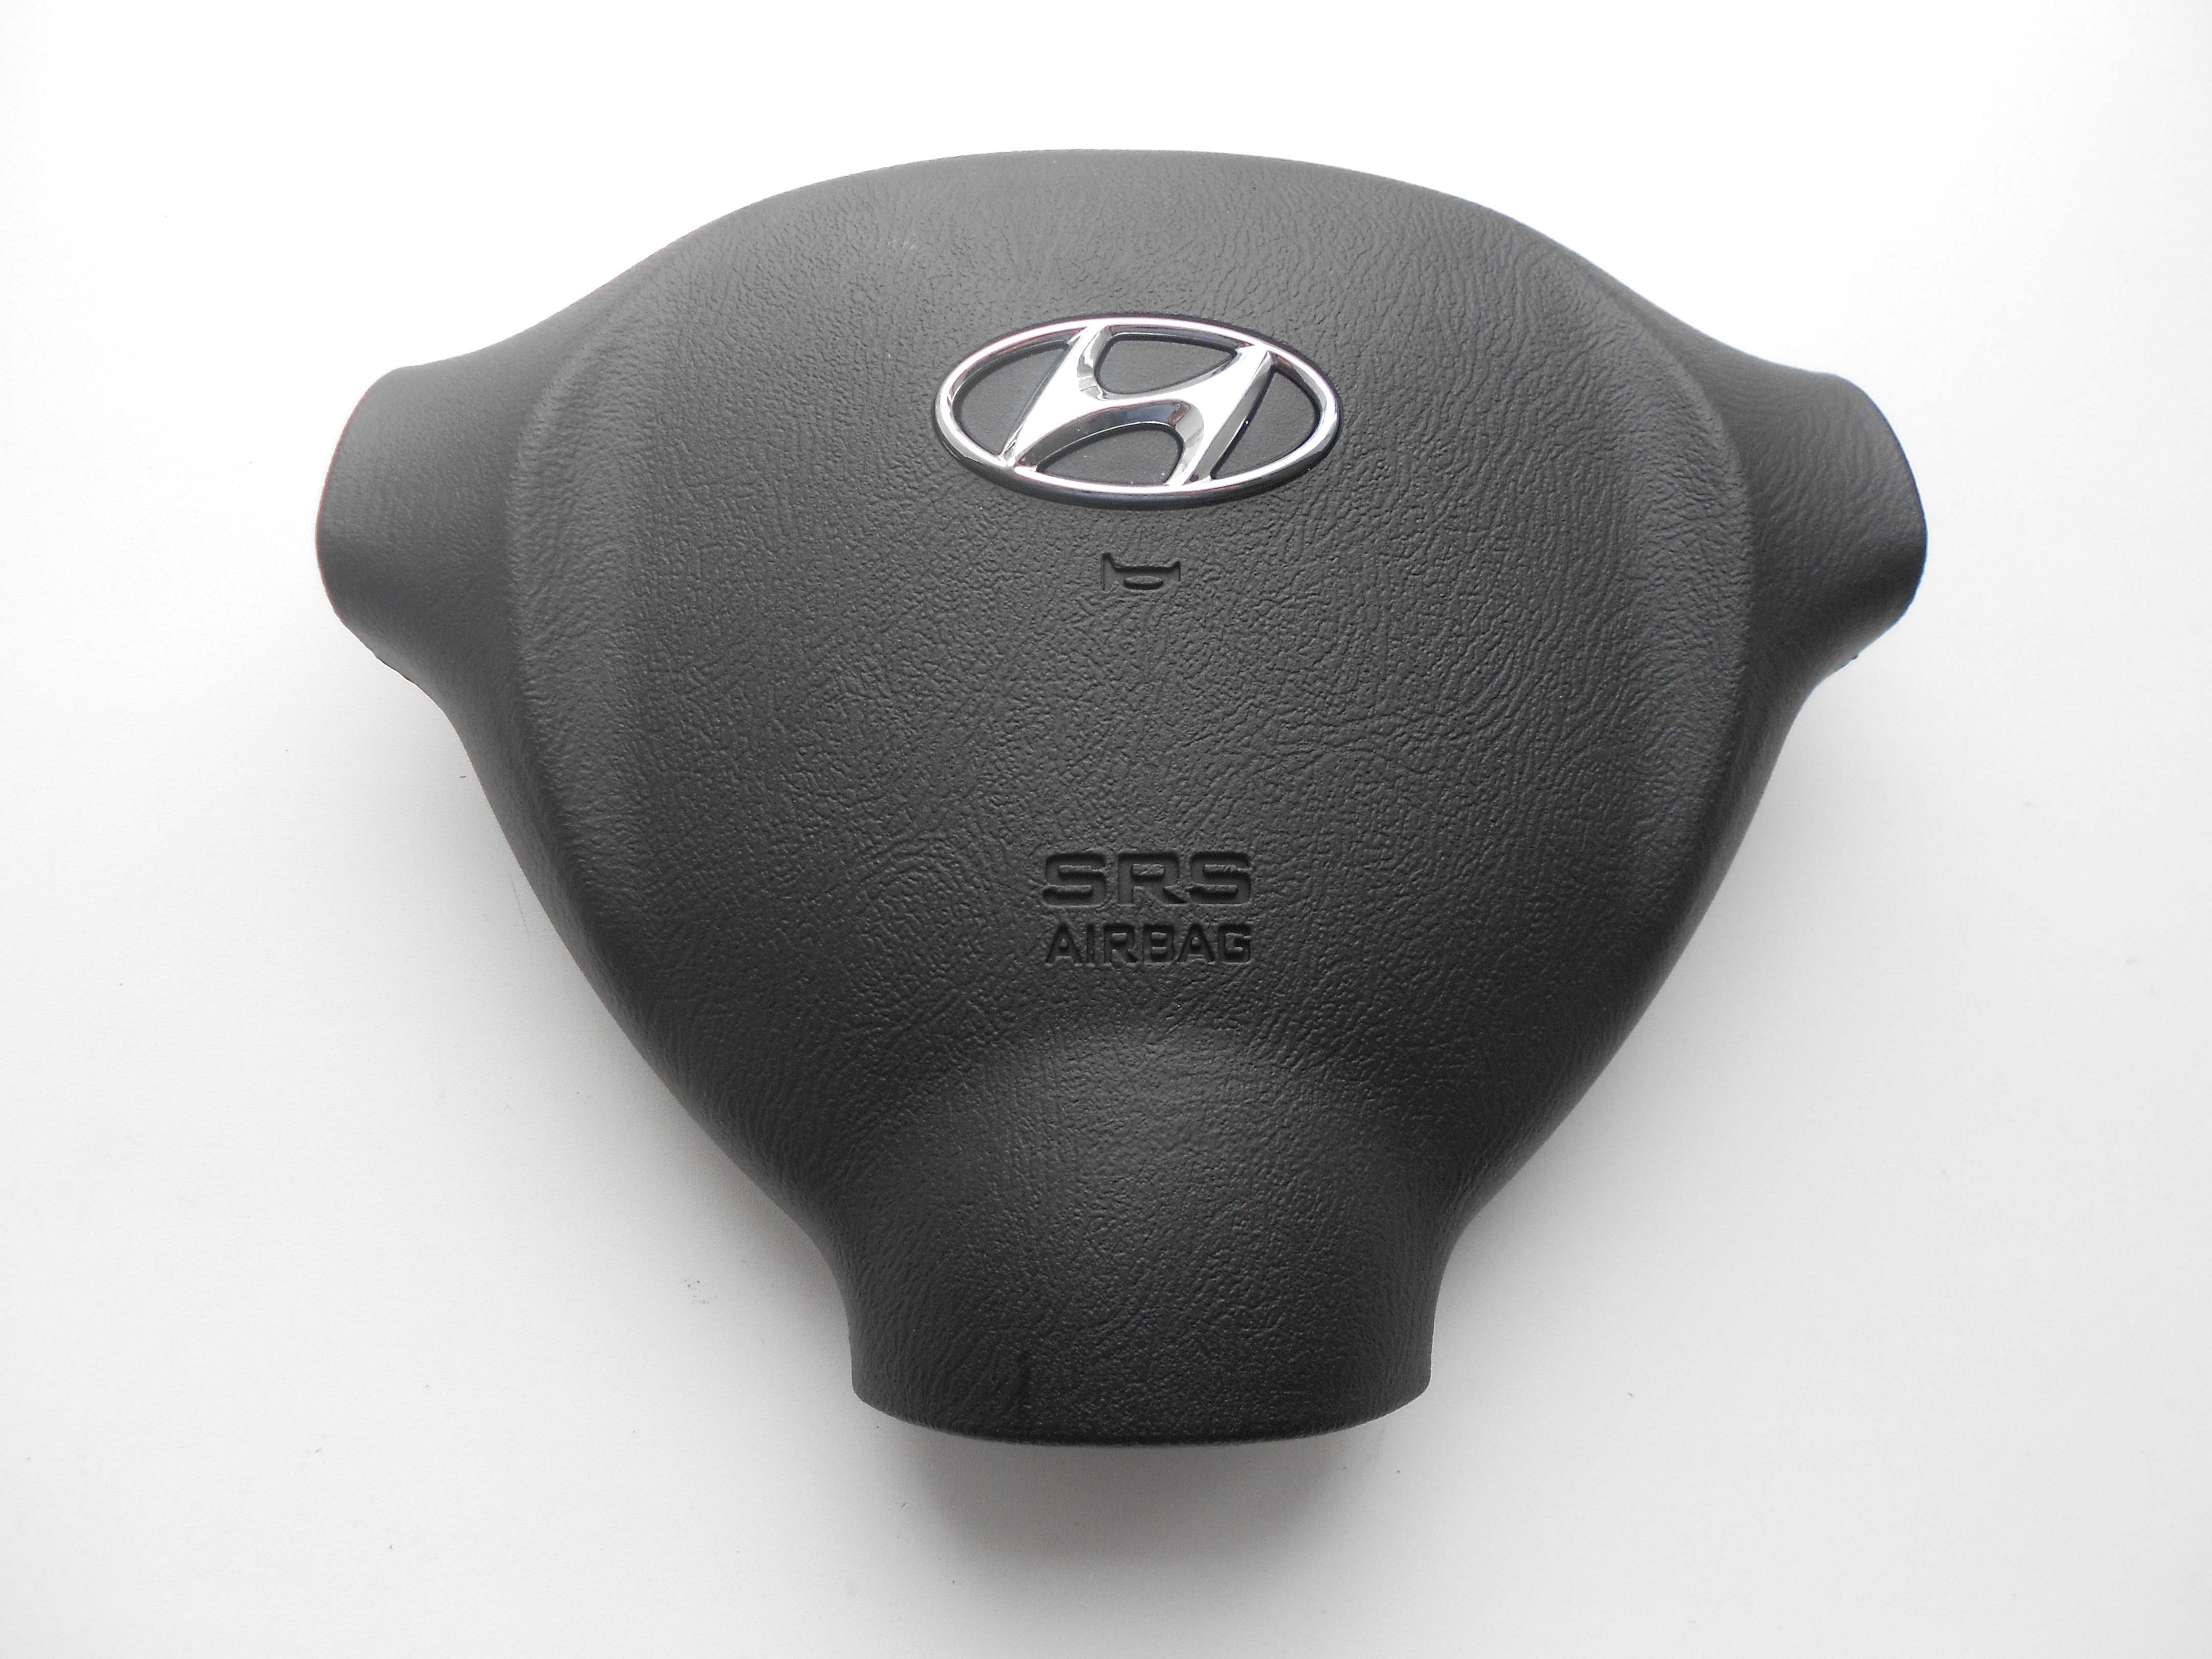 Новые подушки безопасности. Крышка airbag Hyundai Santa Fe Classic. Airbag заглушка муляж Hyundai Santa-Fe. Заглушка руля Санта Фе. Подушка безопасности Хендай Санта Фе.